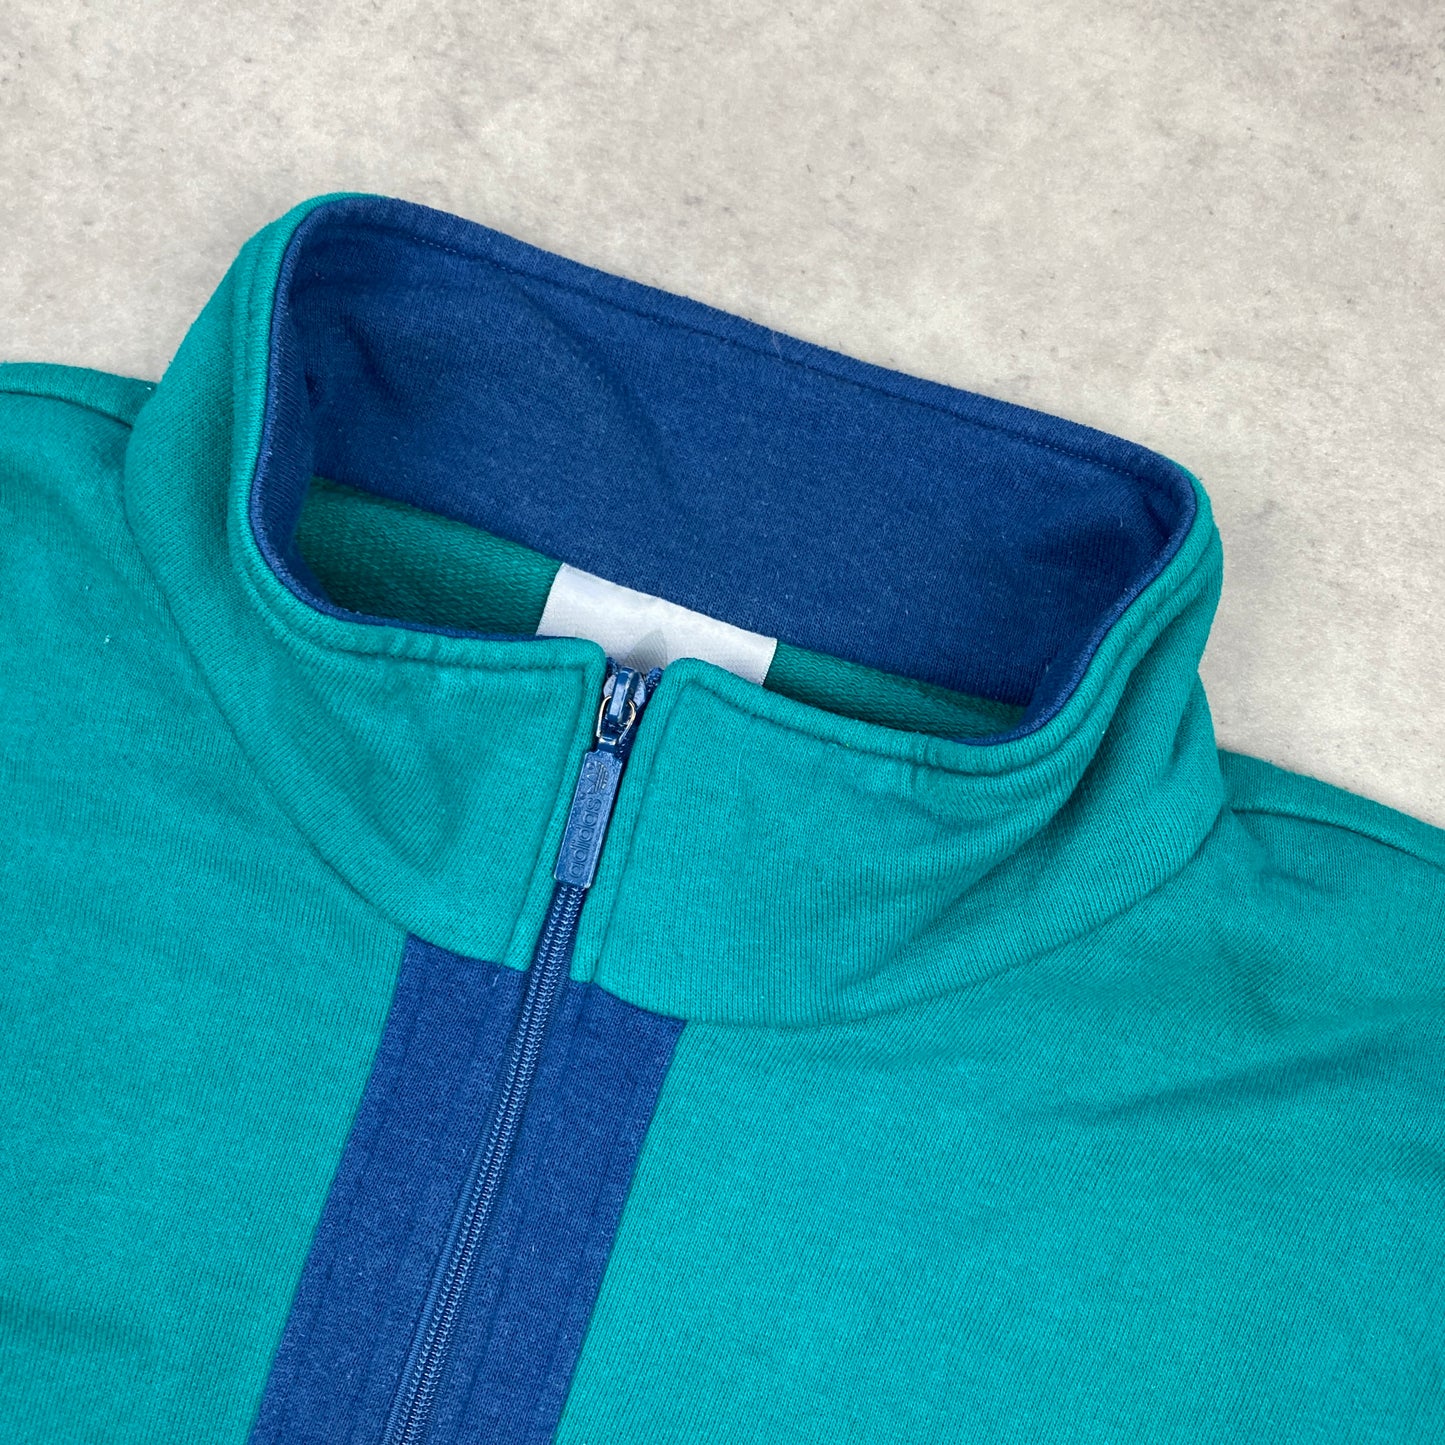 Adidas RARE zip sweater (L)